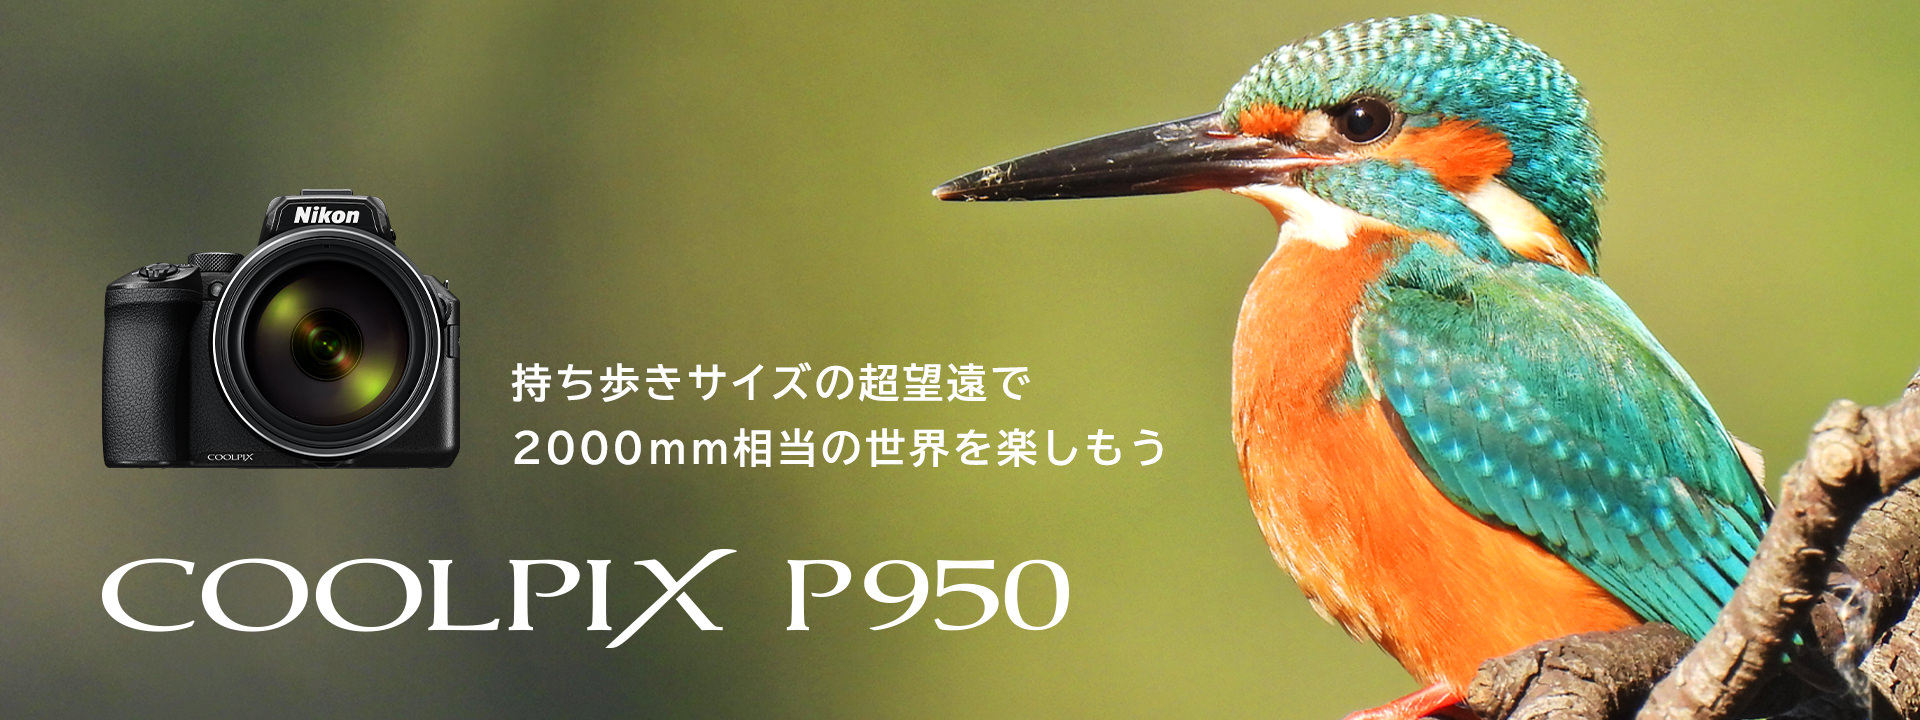 Nikon COOLPIX P950 2000mm望遠！7レンズフード